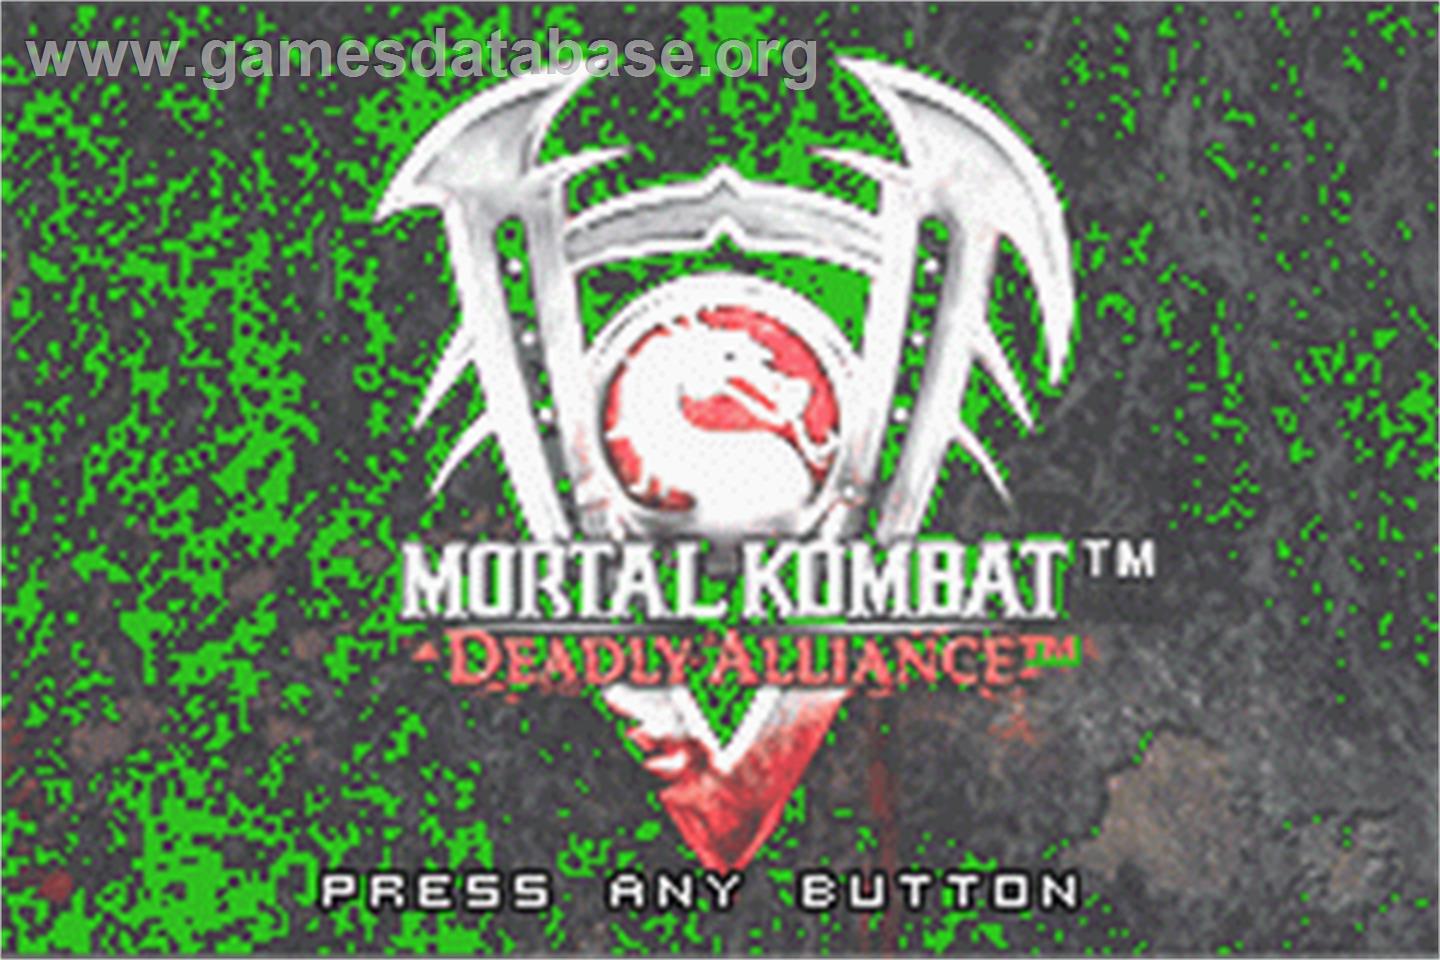 Mortal Kombat: Deadly Alliance - Nintendo Game Boy Advance - Artwork - Title Screen